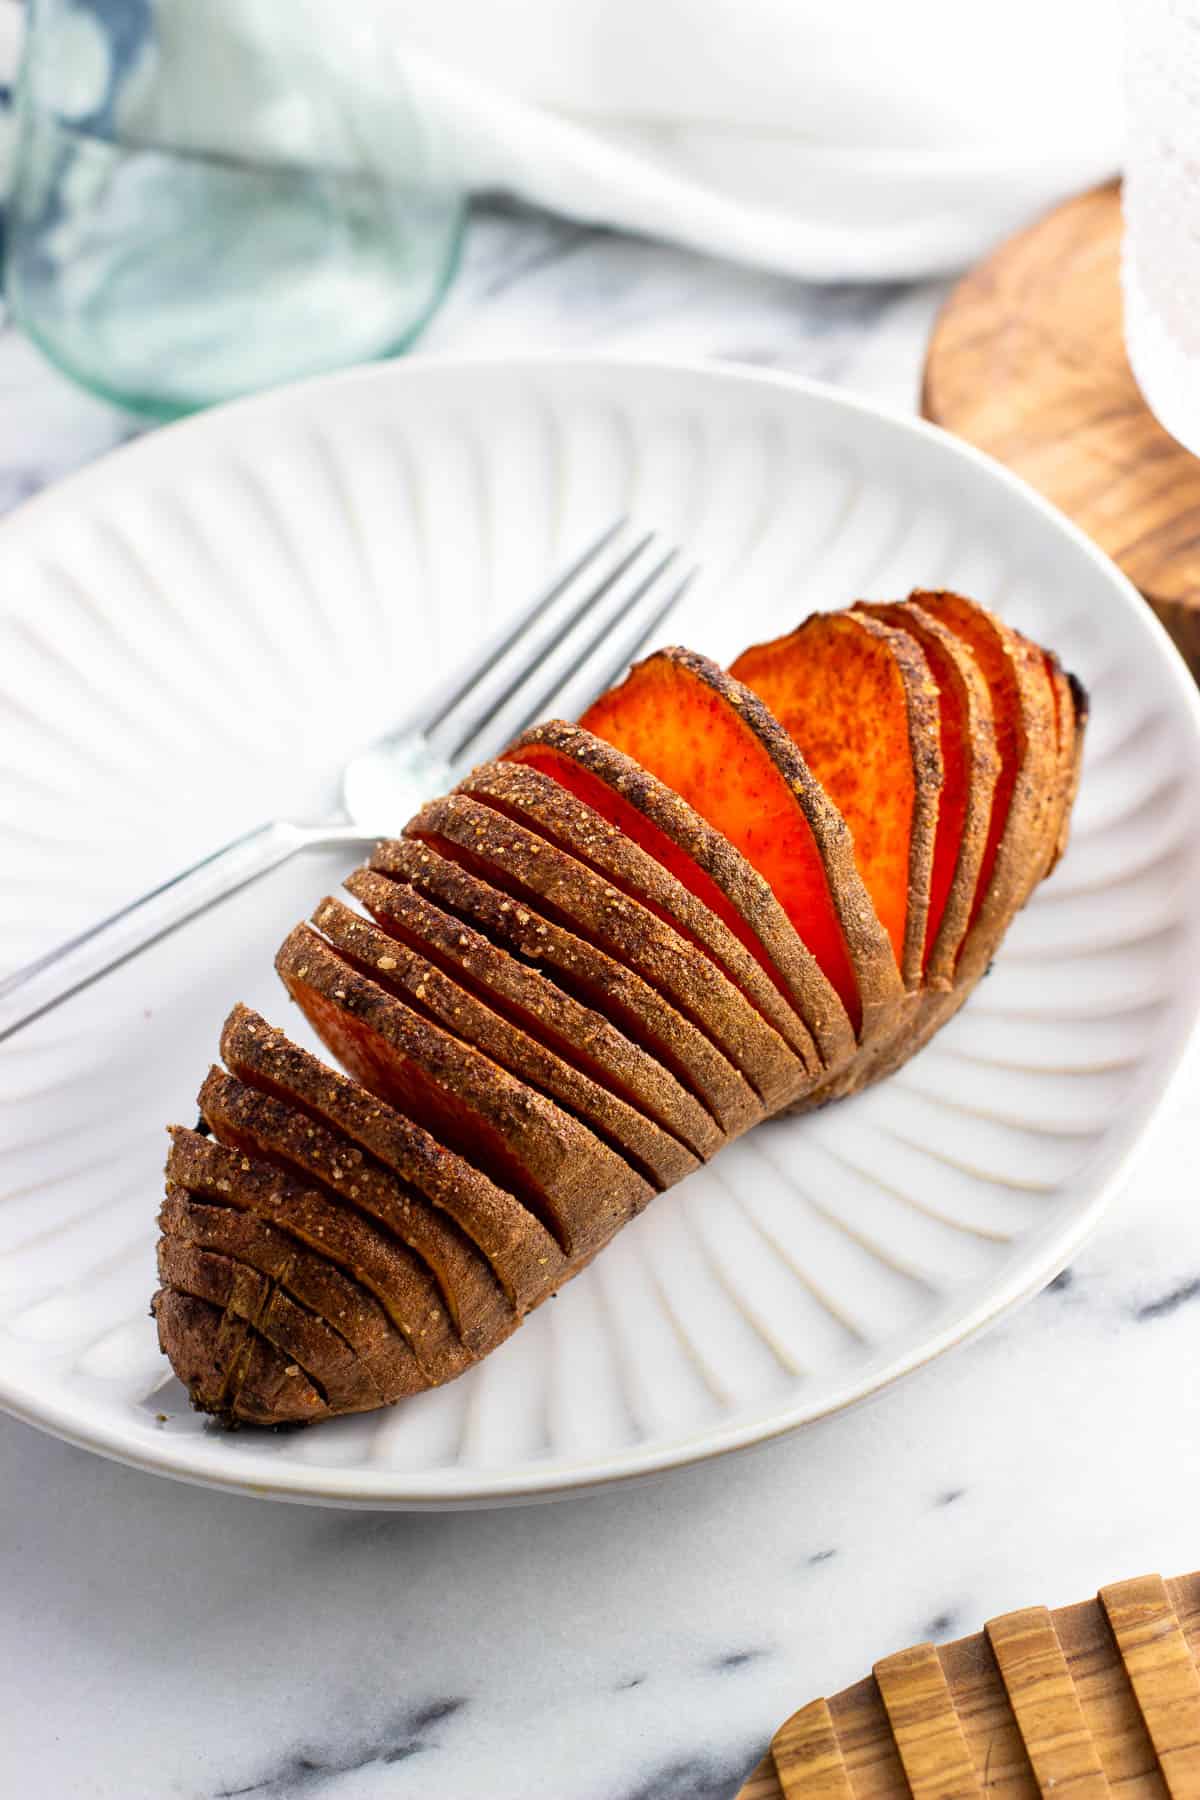 A hasselback-style sweet potato on a plate.